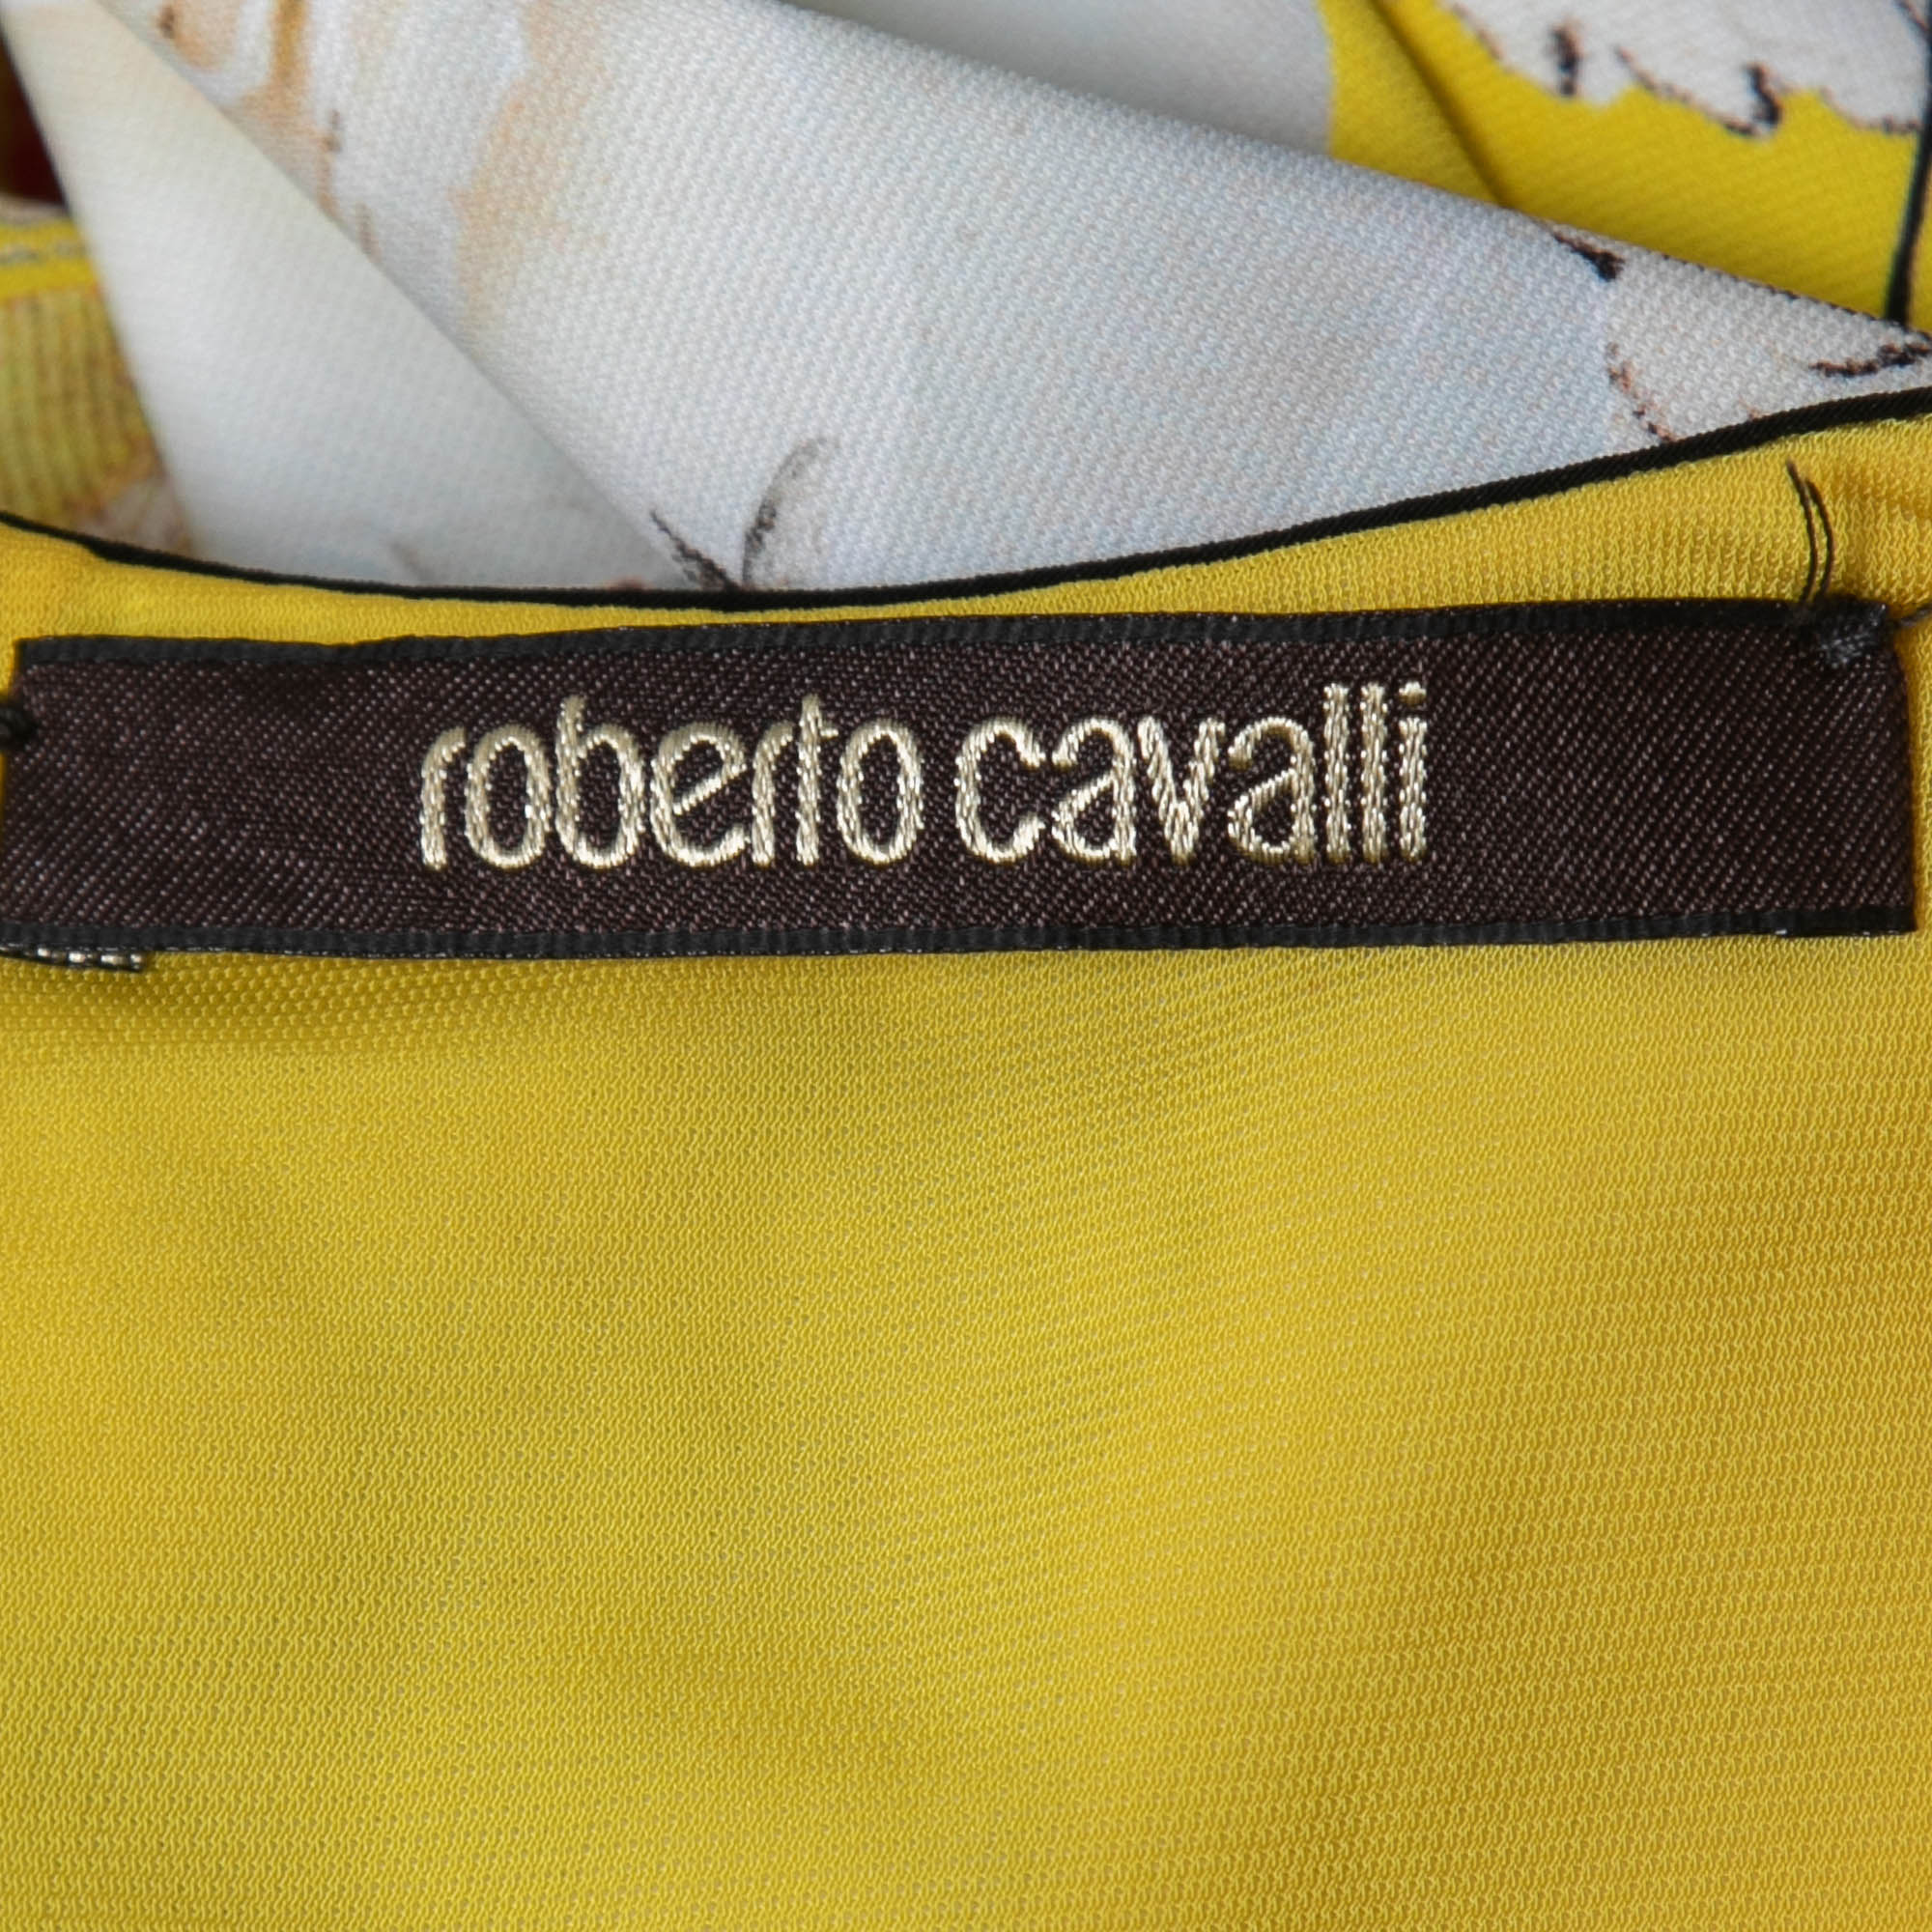 Roberto Cavalli Yellow Floral Printed Jersey Mini Dress S